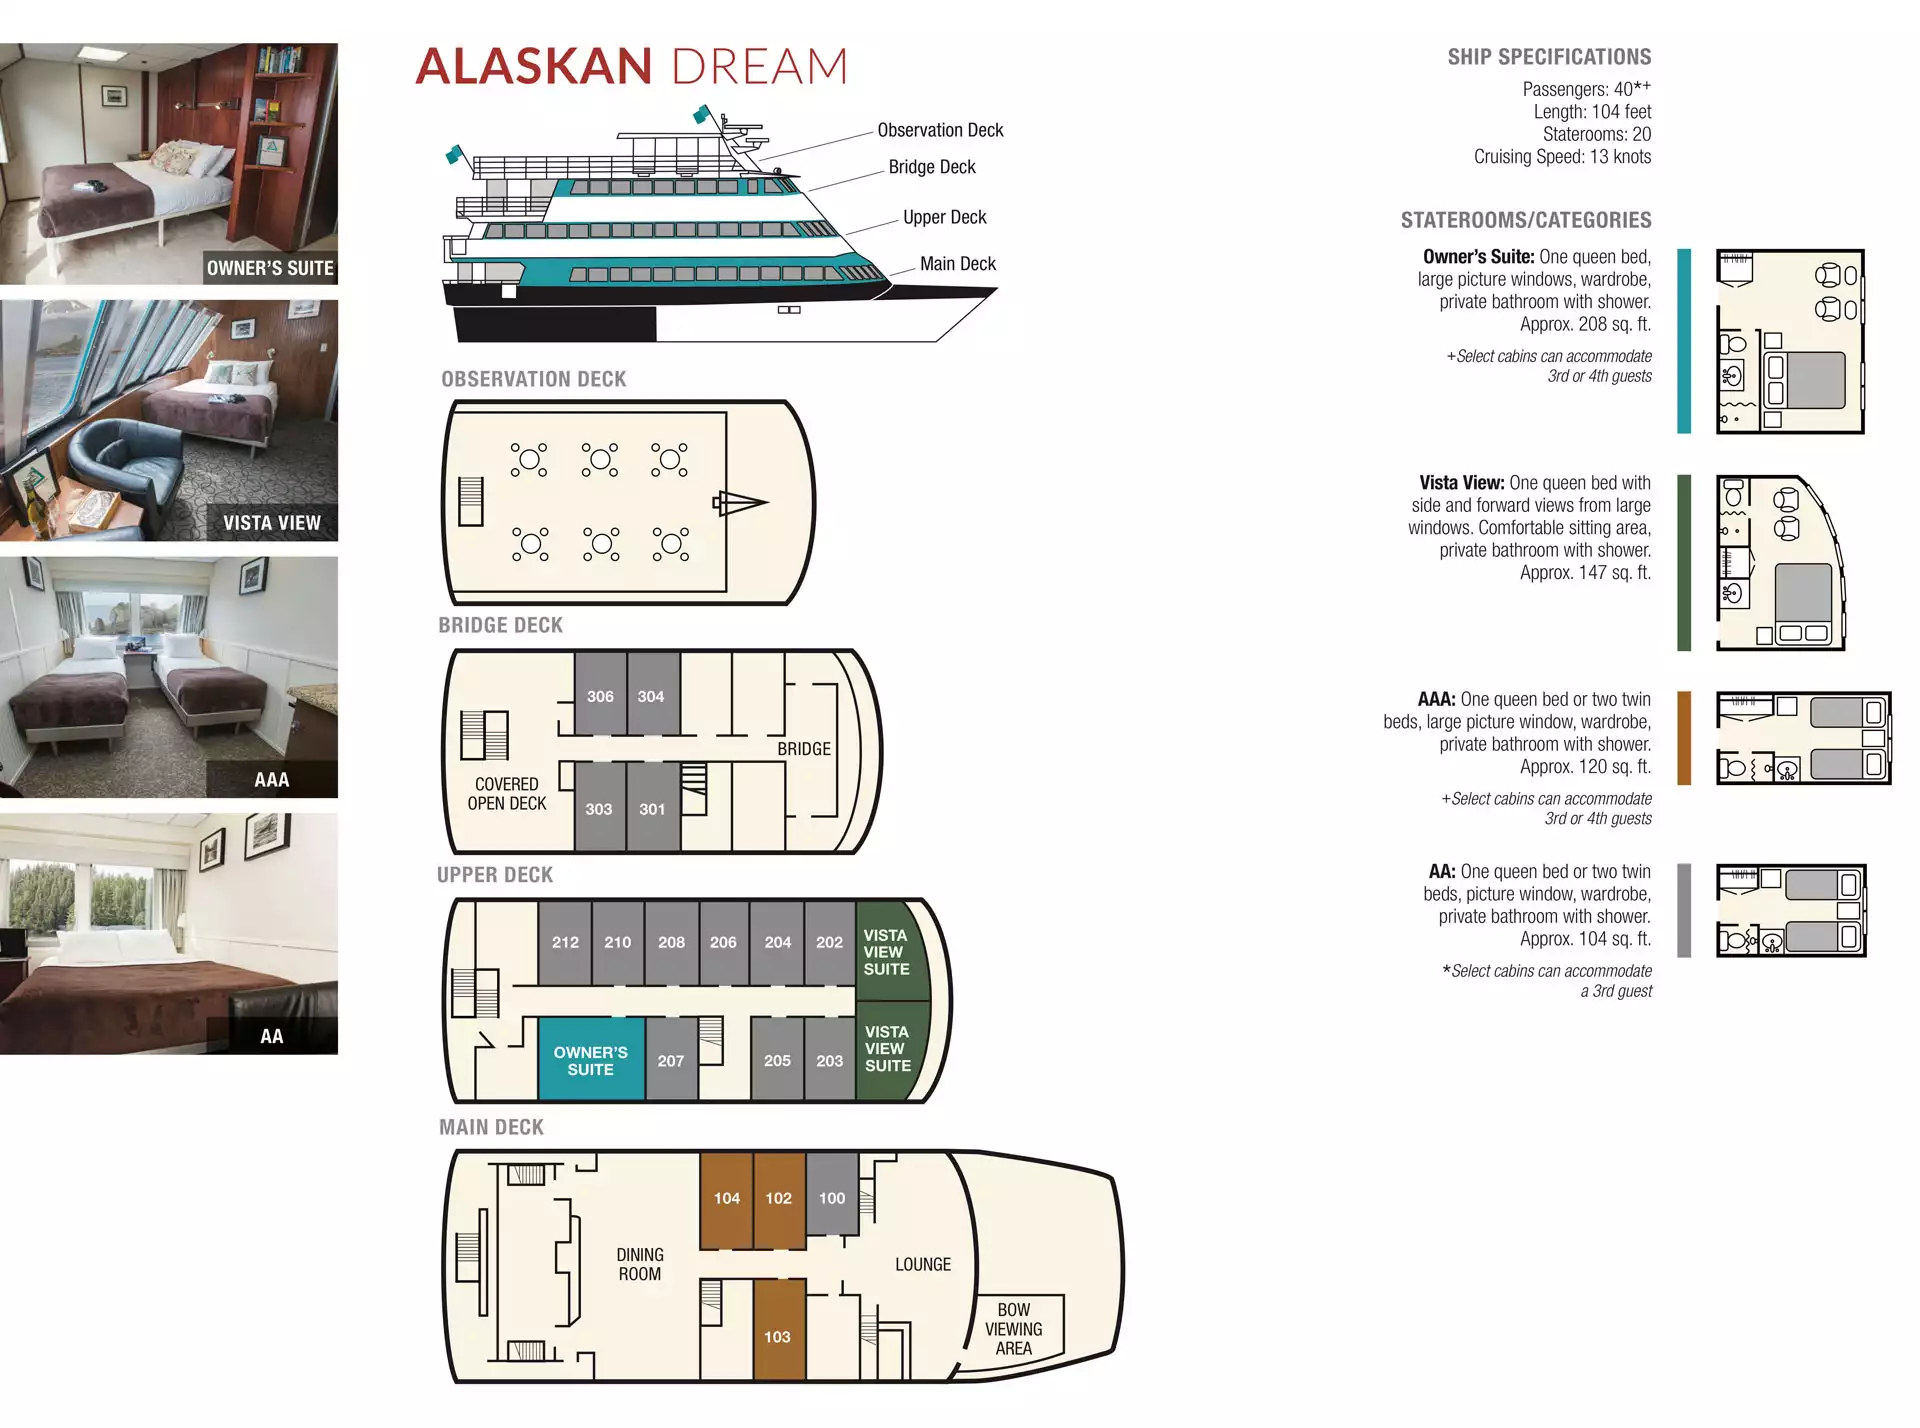 Deck plan of the Alaskan Dream showing the main deck, upper deck, bridge deck, and observation deck.